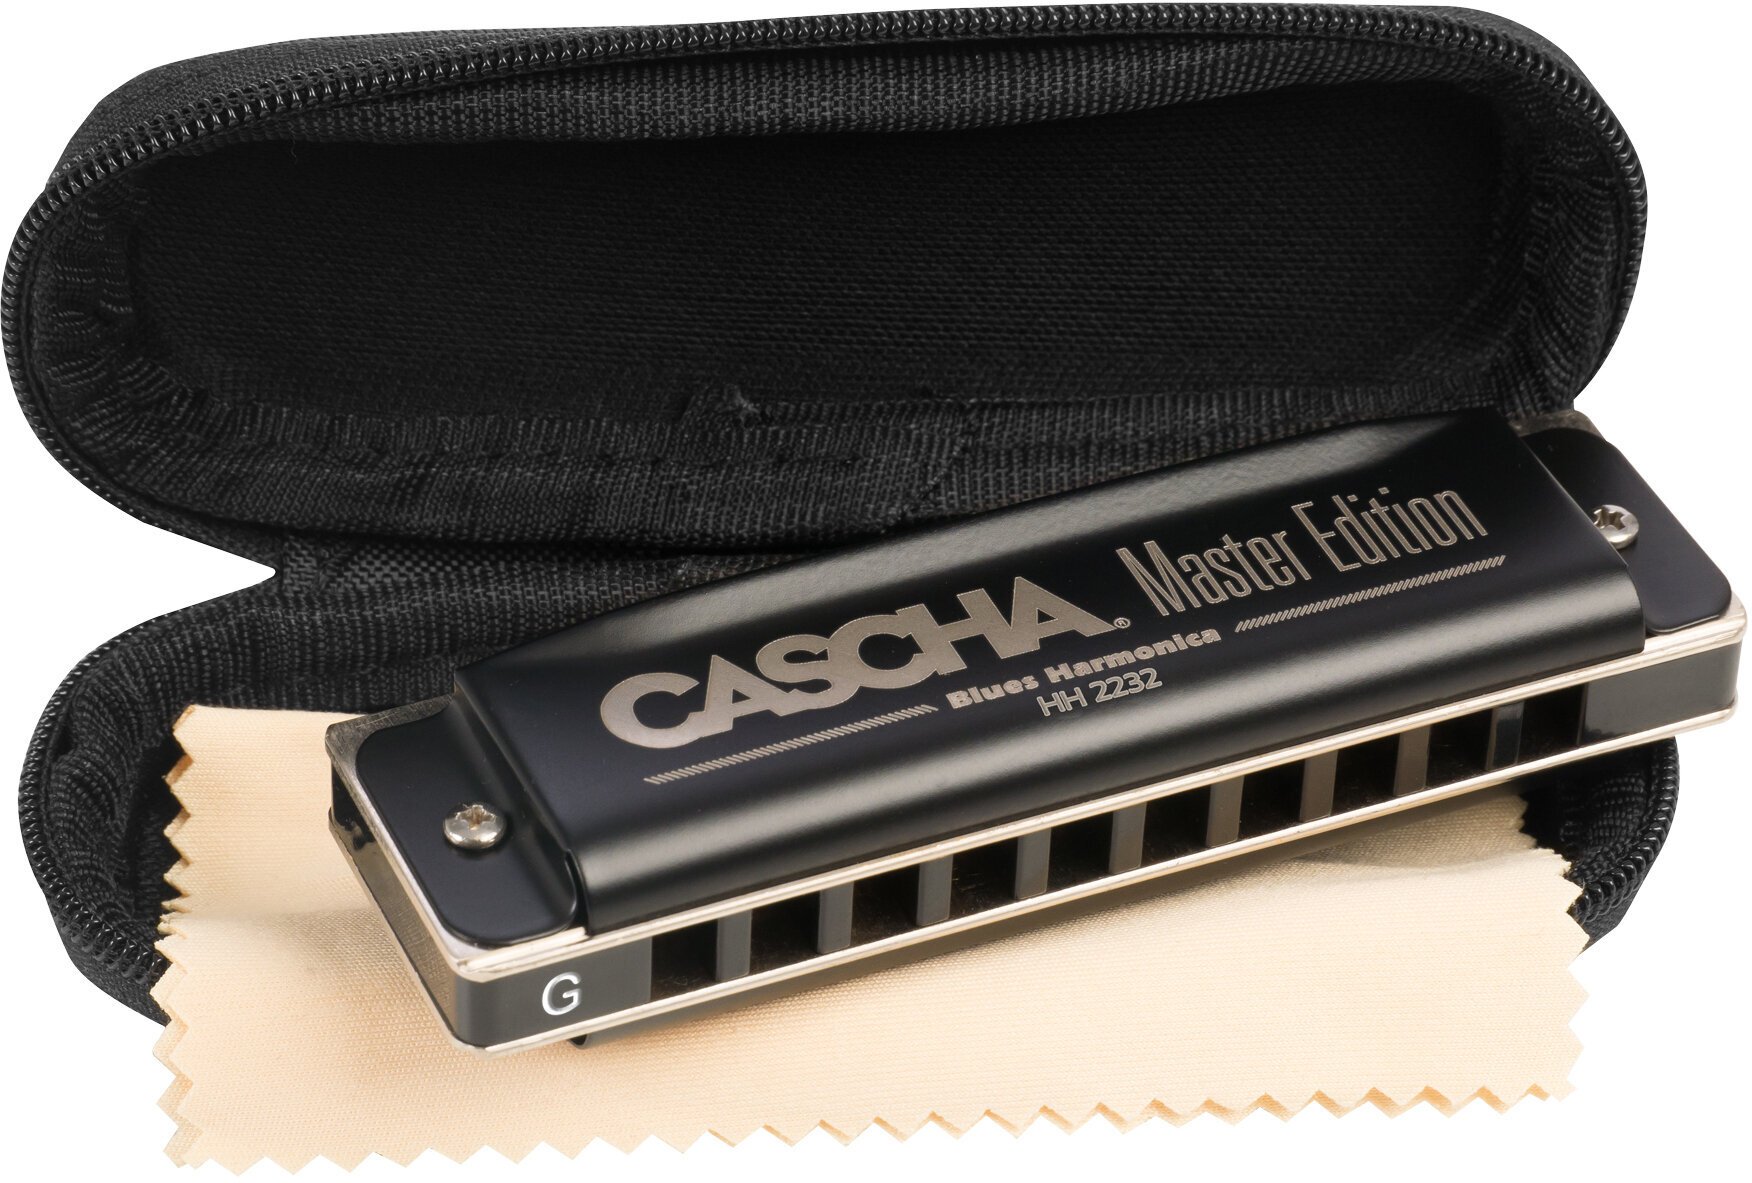 Diatonic harmonica Cascha HH 2232 Master Edition Blues G